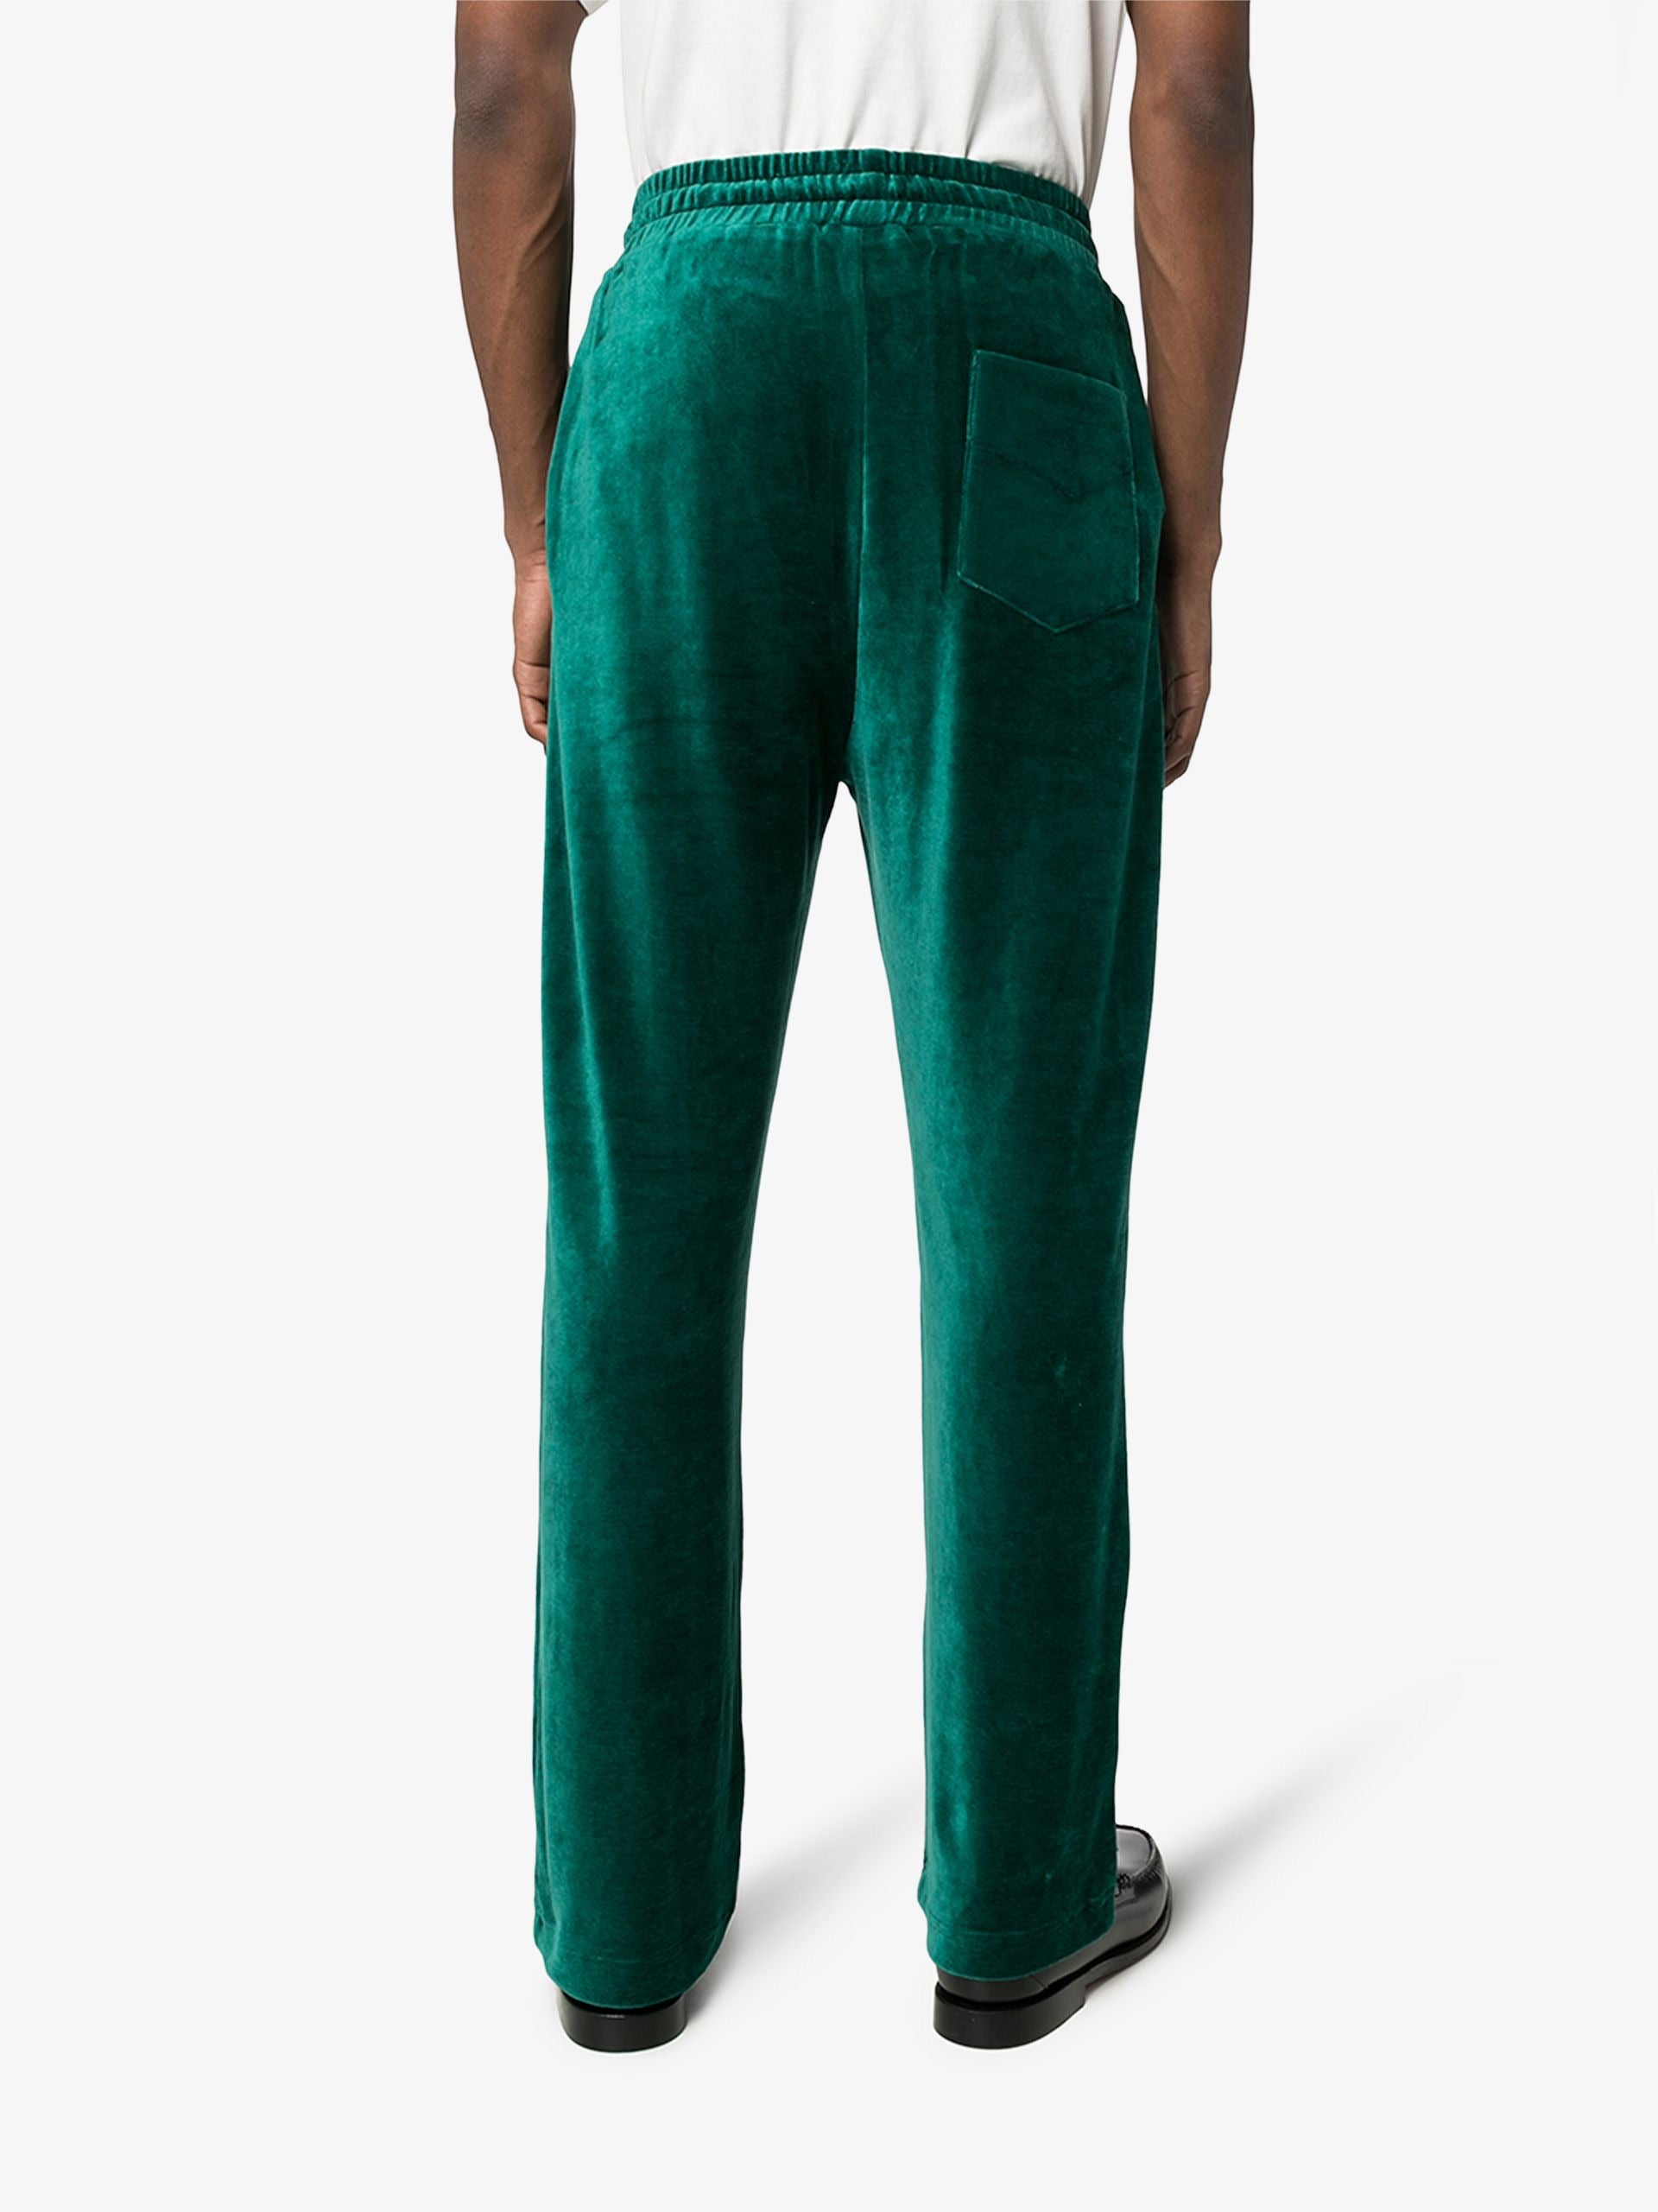 Emerald Green Velour Track Pants